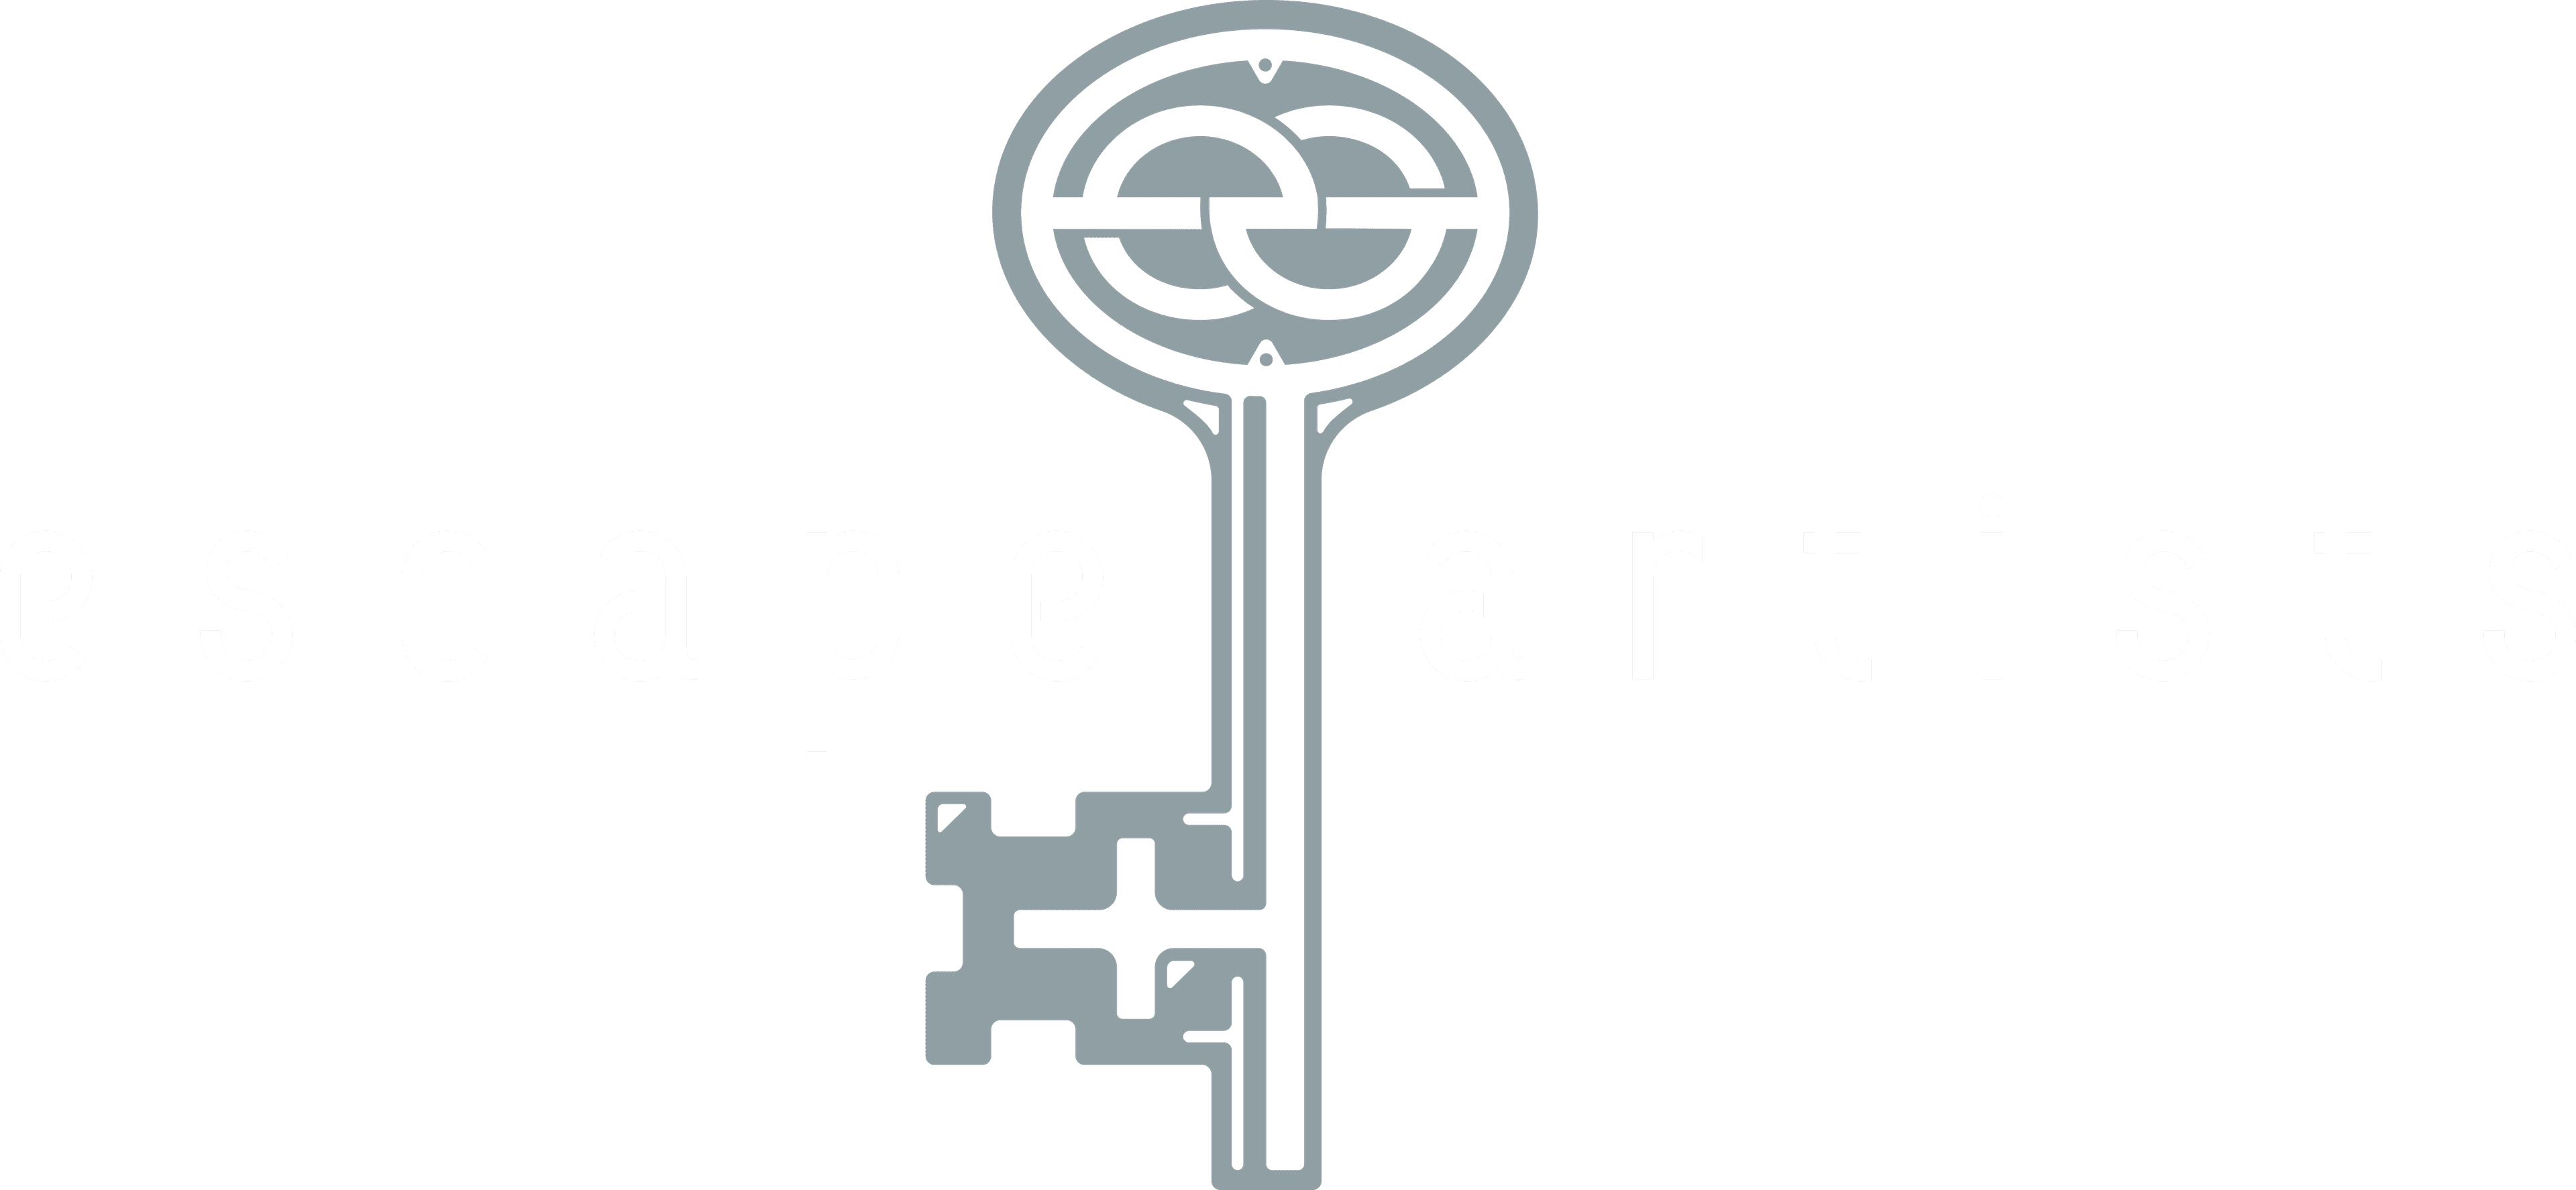 Elm Street Design Services - Escape Artists Logo Design